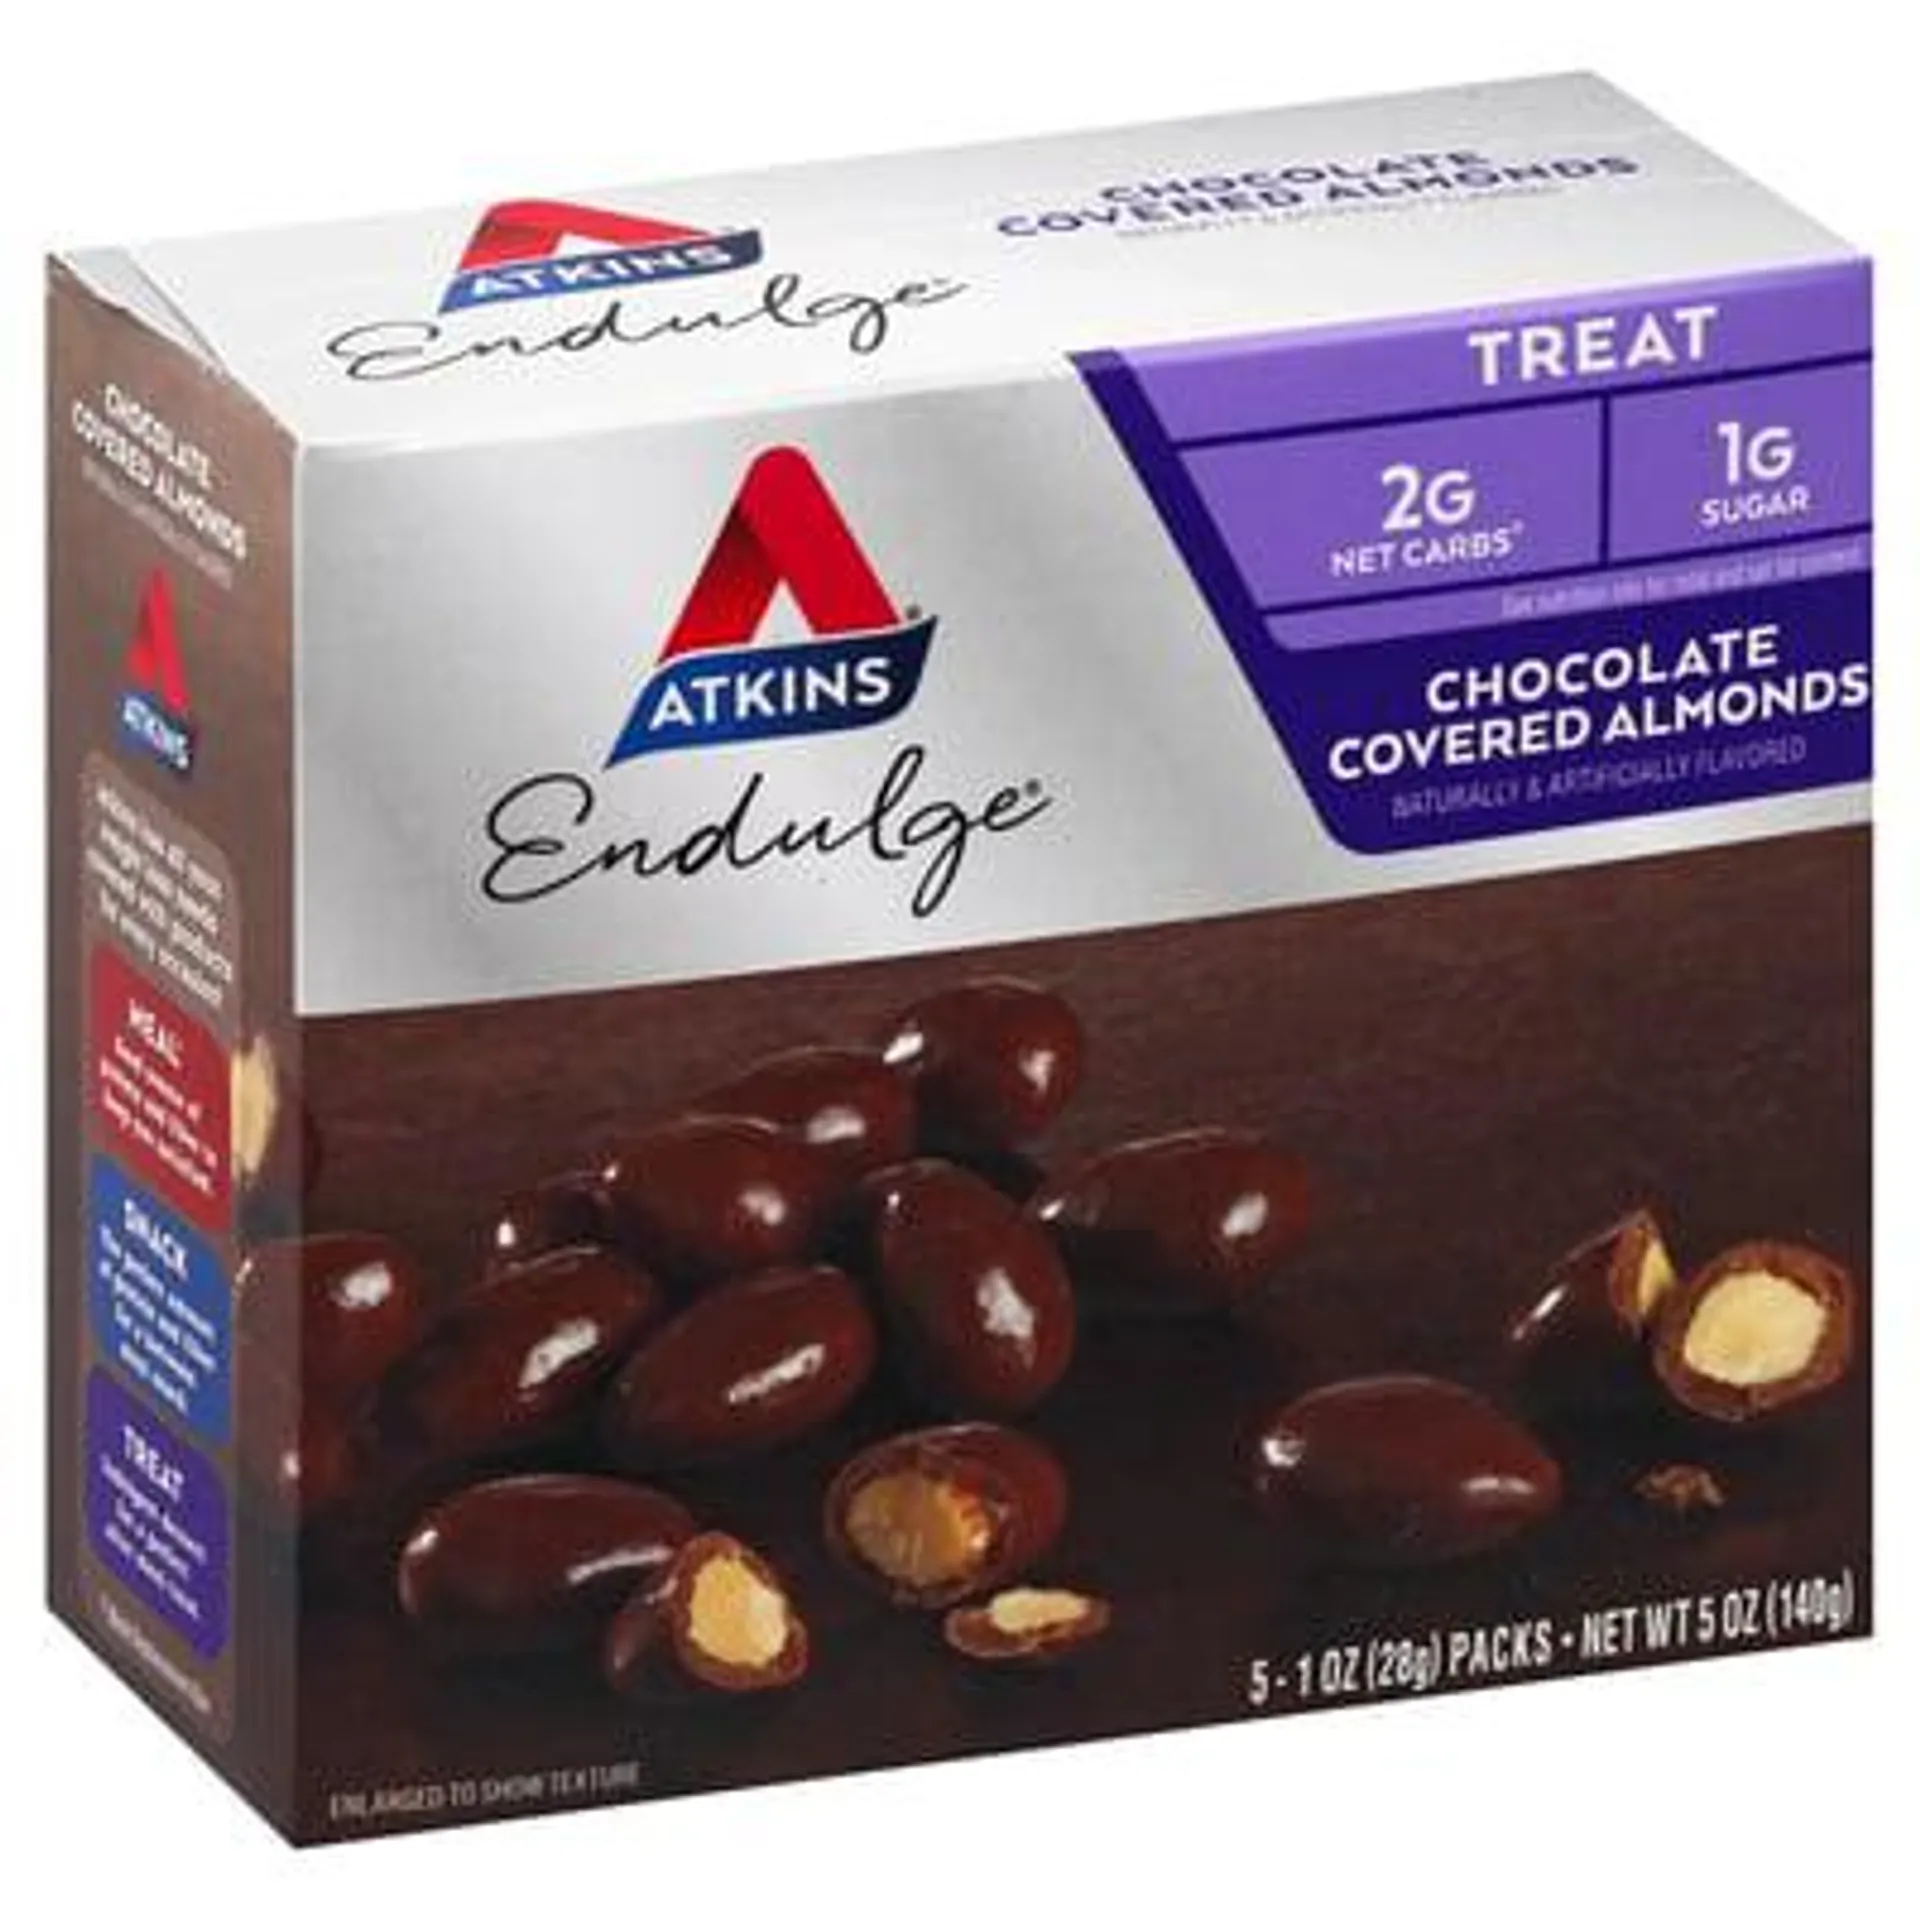 Atkins, Endulge - Almonds, Chocolate Covered